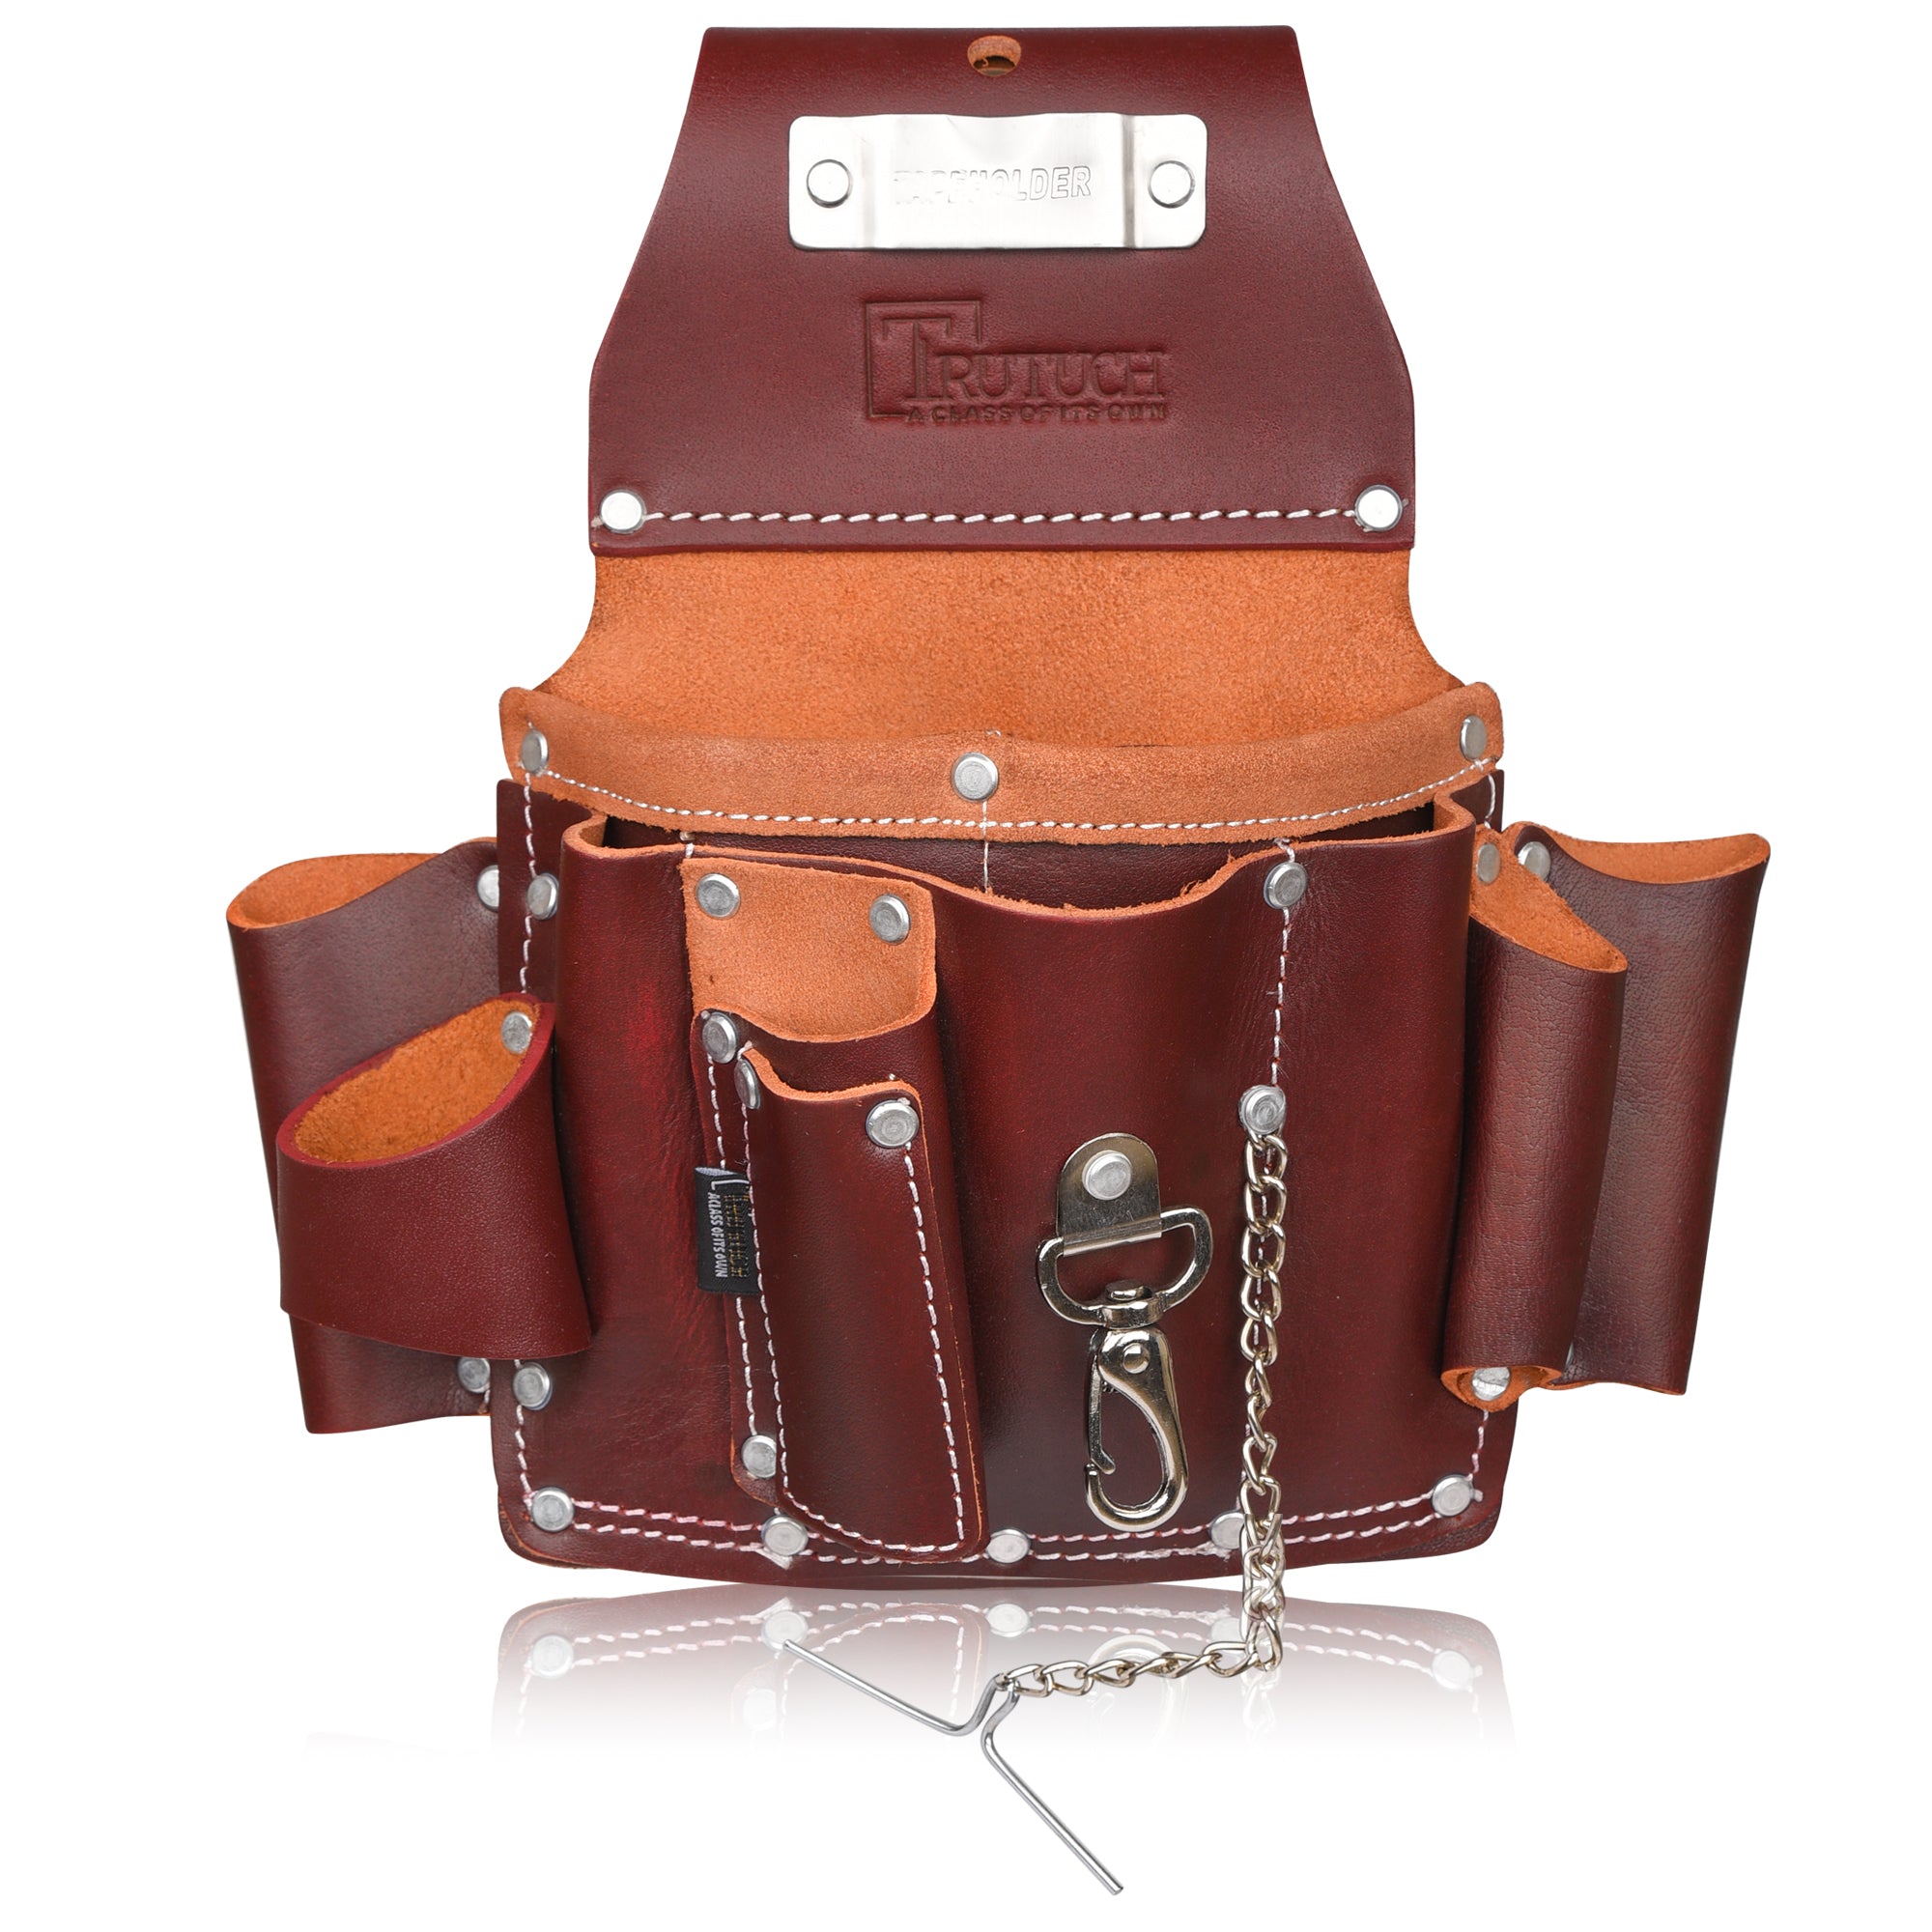 Trutuch Leather Tool Belt, 18 Pockets, Handyman Tool Belt, Carpenter  Tool Belt, Tool Bag, Framers Tool Belt